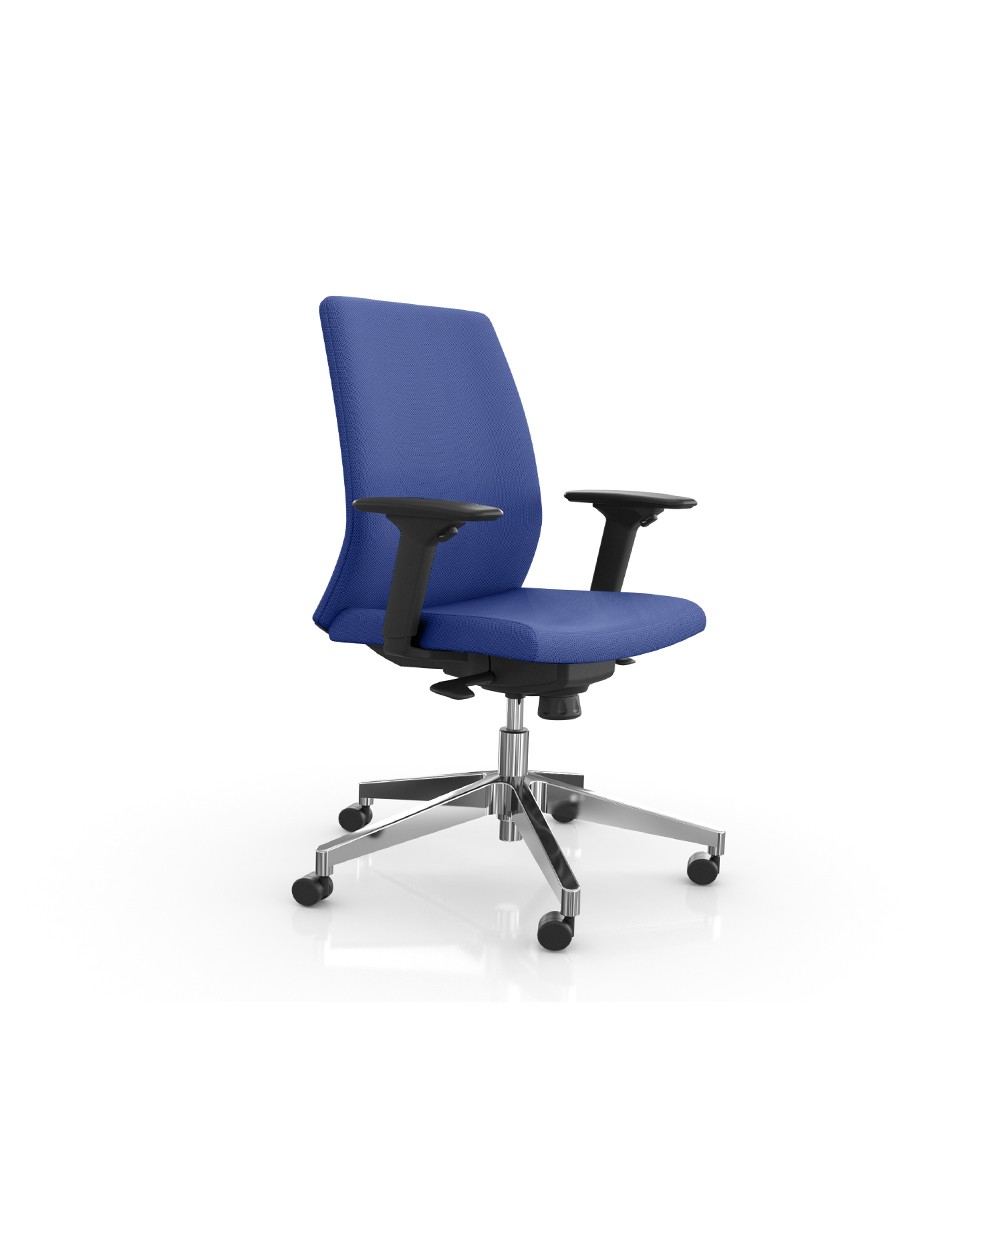 Silla rocada direccion brazos regulables base aluminio respaldo y asiento tela ignifuga azul 680x630x990 mm